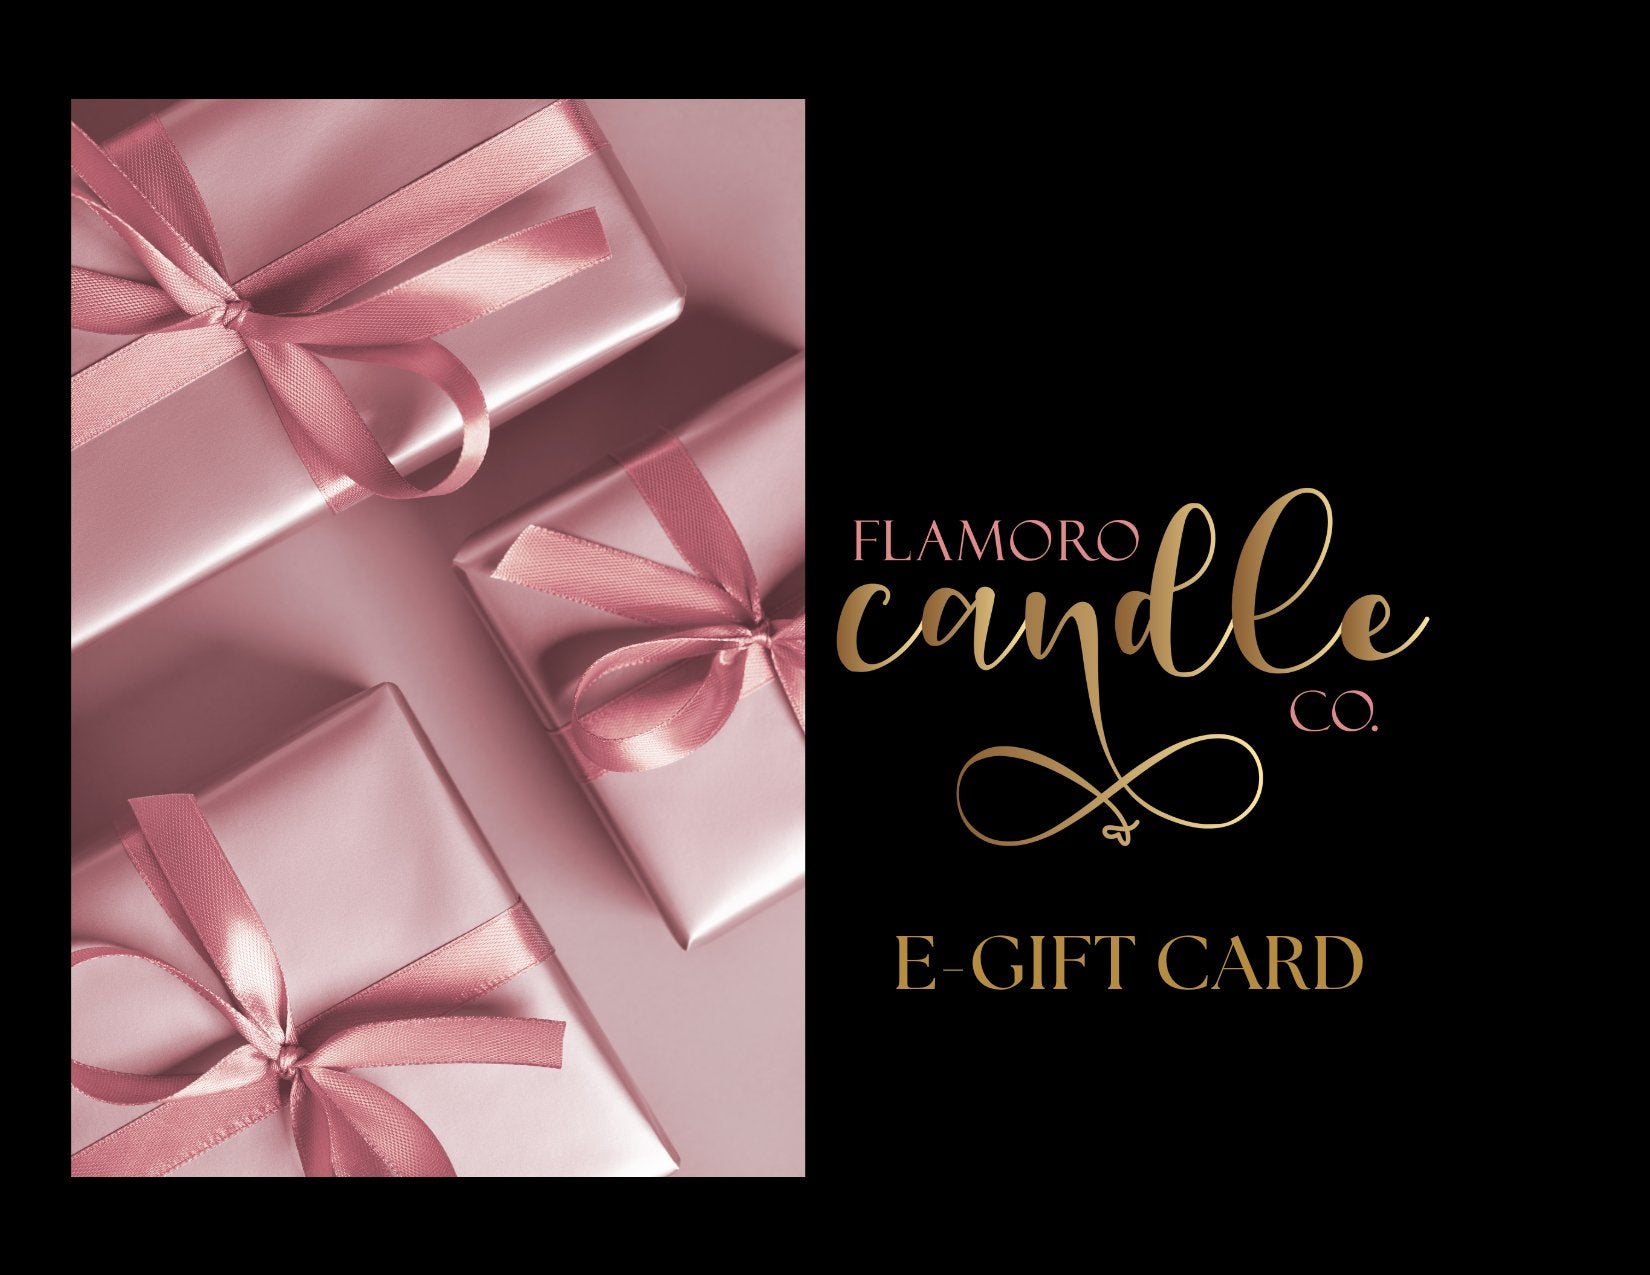 Gift Card - Flamoro Candle Co.